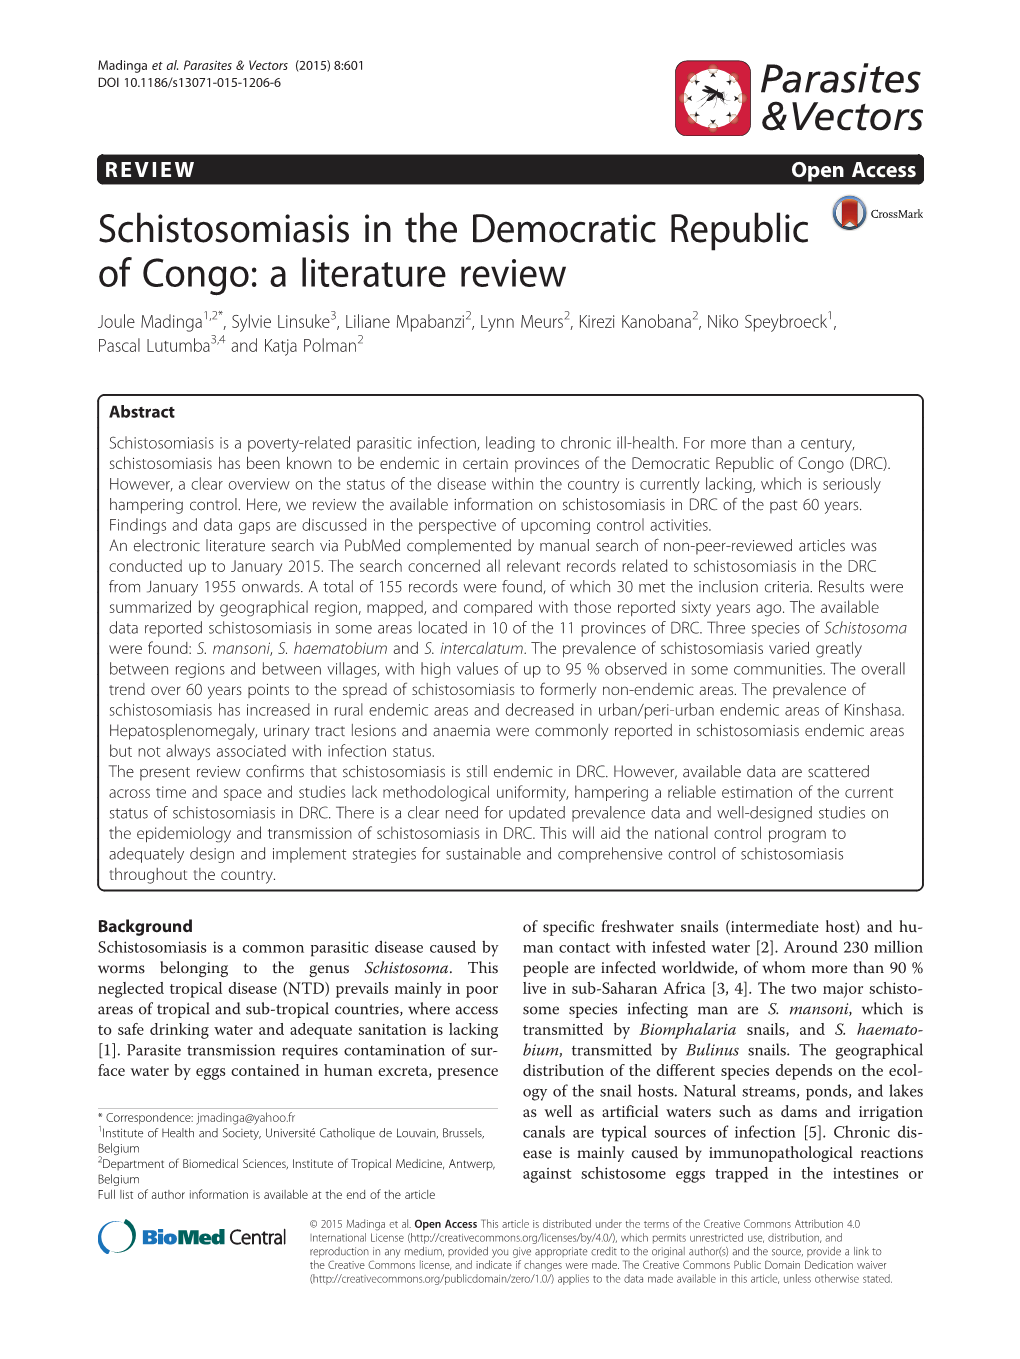 Schistosomiasis in the Democratic Republic of Congo: a Literature Review